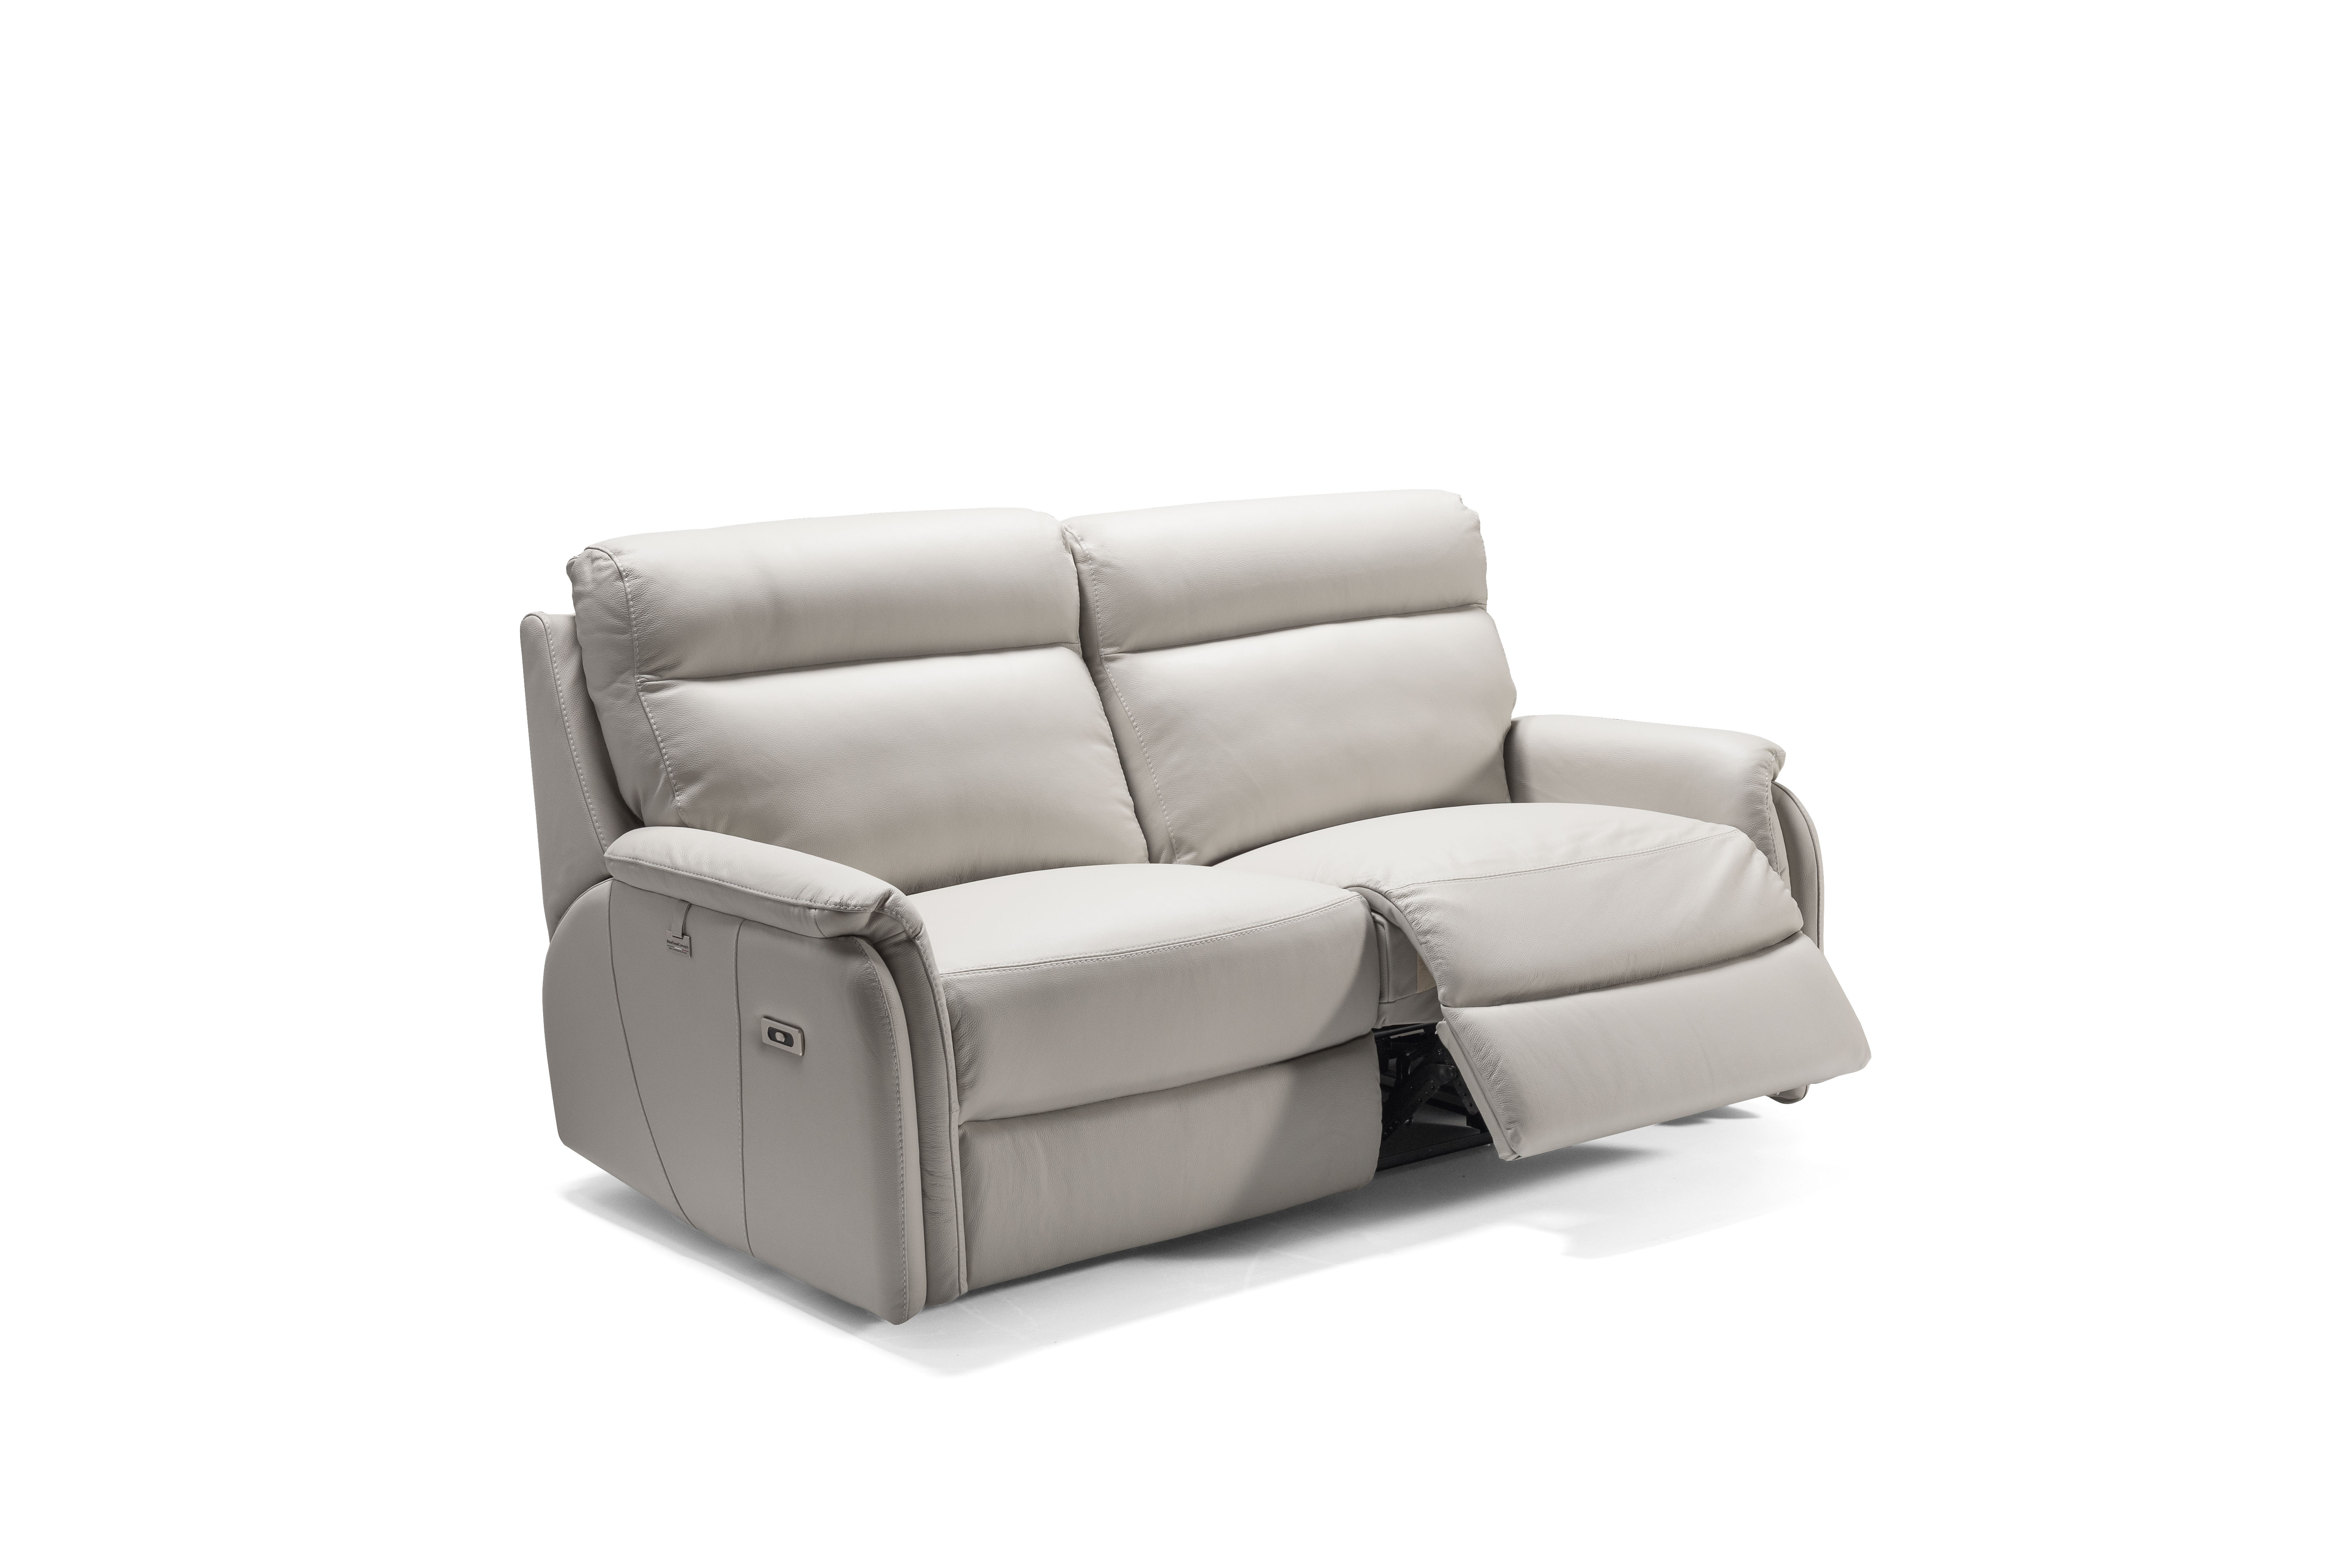 FOX Italian Leather Recliner 3 & 2 Seat Sofa by Galieri - Cenere Light Grey - Image 3 of 4